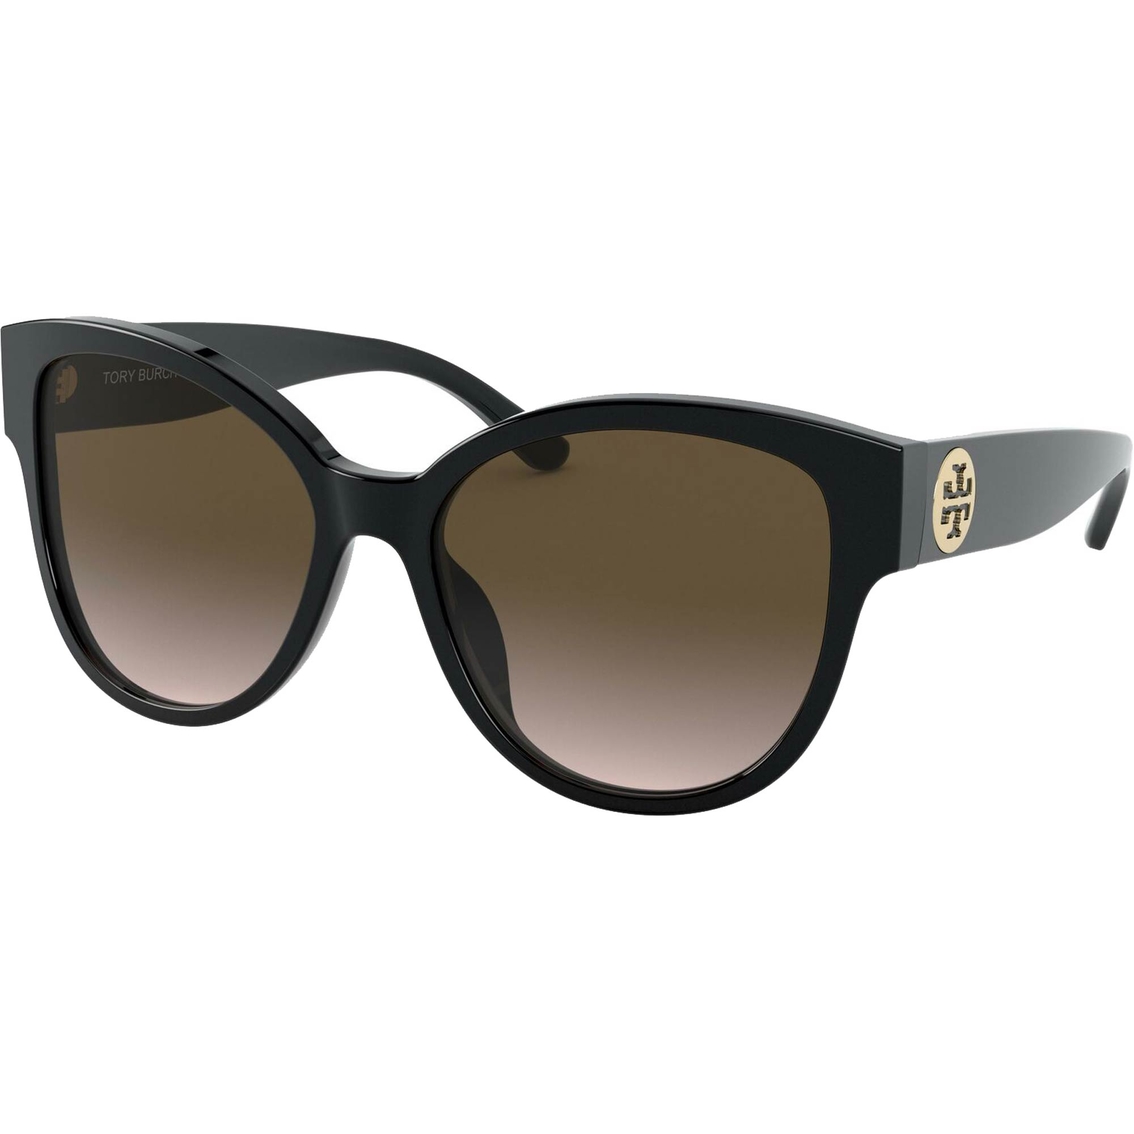 Tory Burch Round Sunglasses 0ty7155u | Women's Sunglasses | Clothing ...